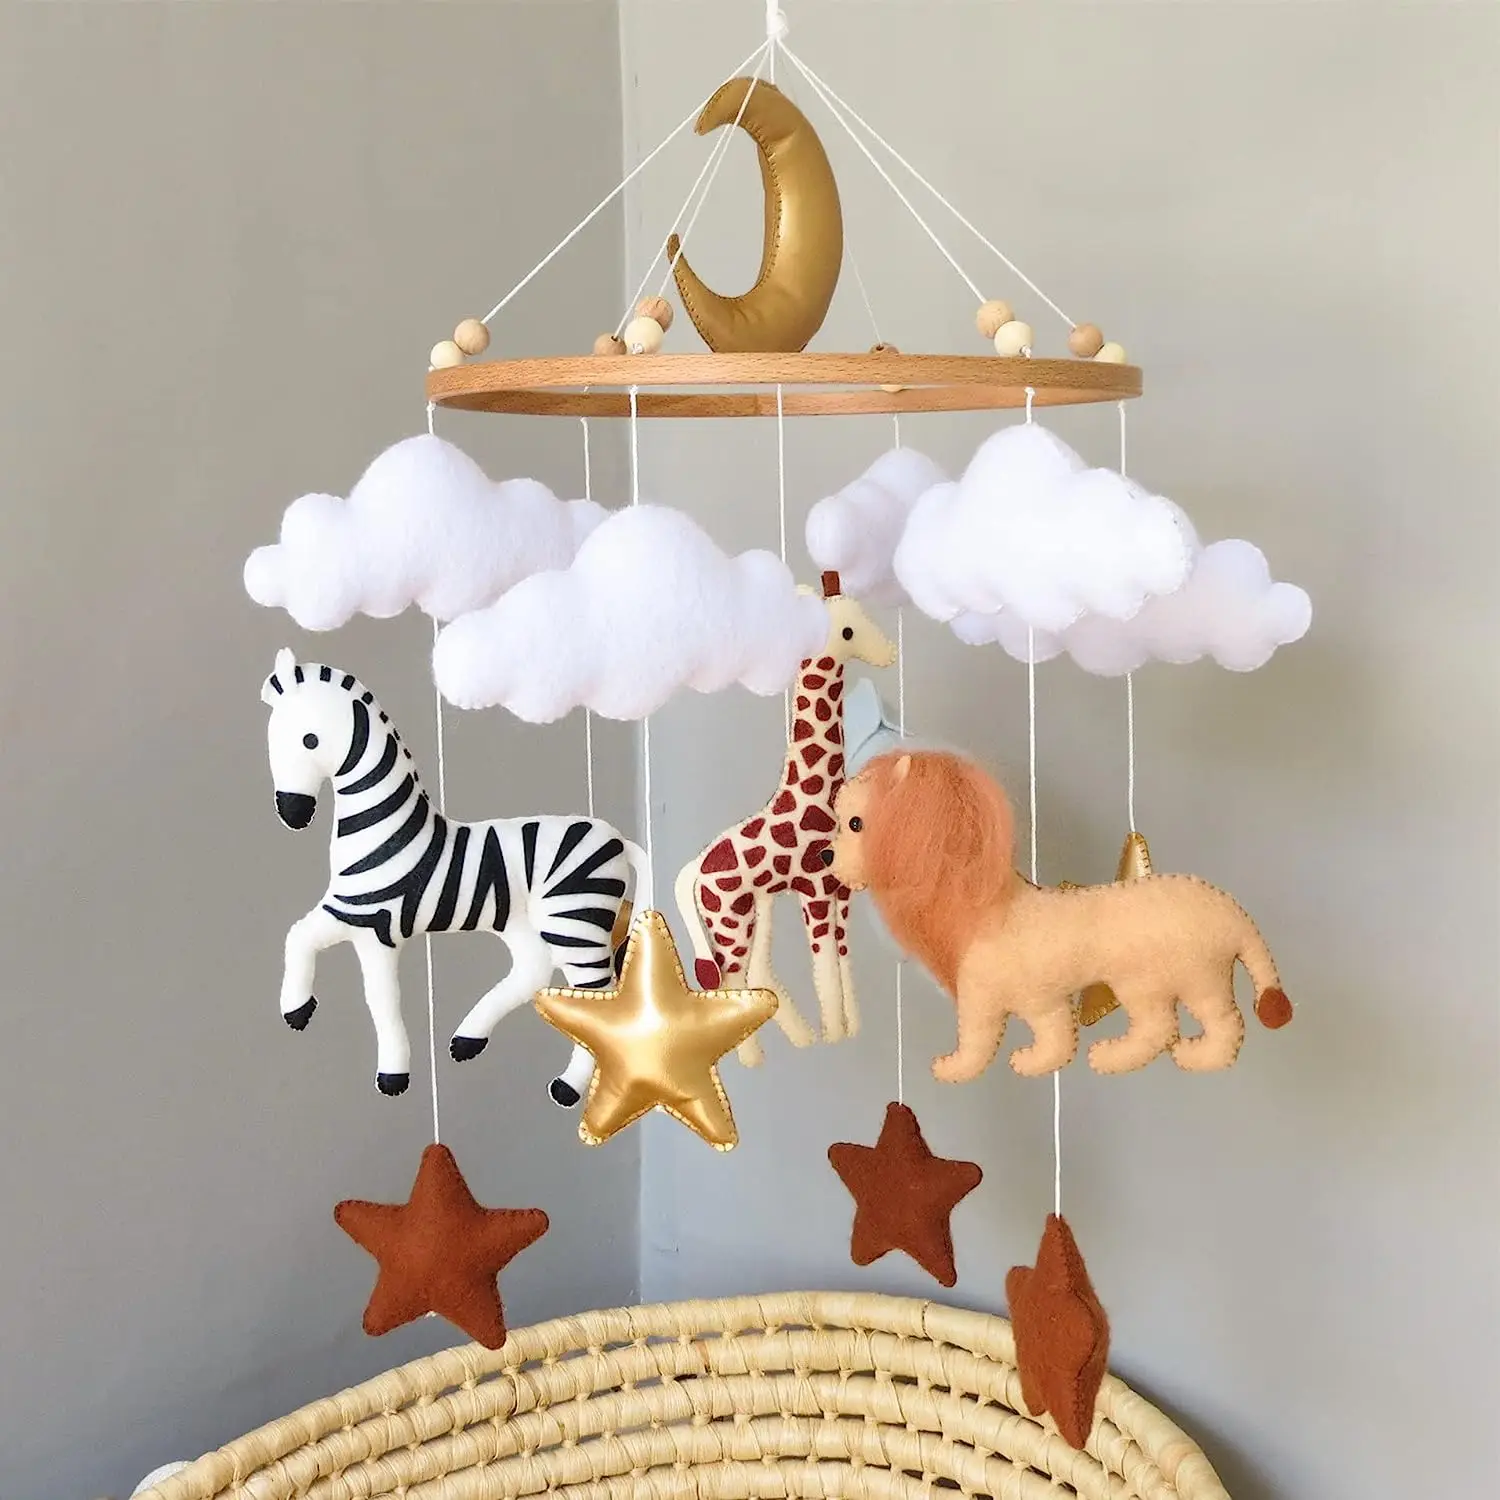 Wholesale Handmade Crib Cot Nursery Baby Mobiles with Stuffed Rainbow Crib Mobile Boho Baby Mobile for Crib Nursery